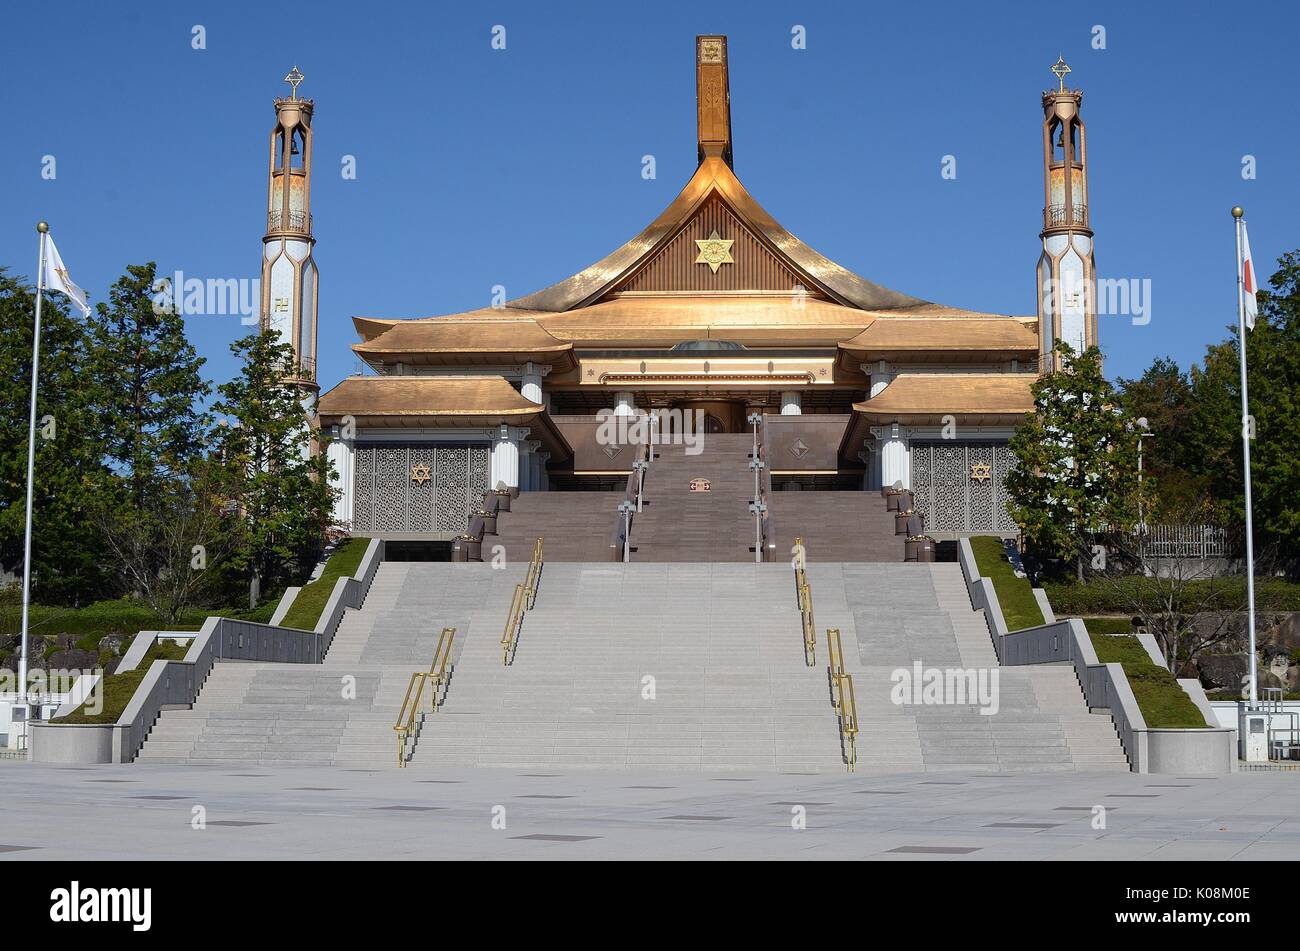 SUKYO MAHIKARI NEW WORLD RELIGION HEADQUARTERS, TAKAYAMA, JAPAN Stock Photo